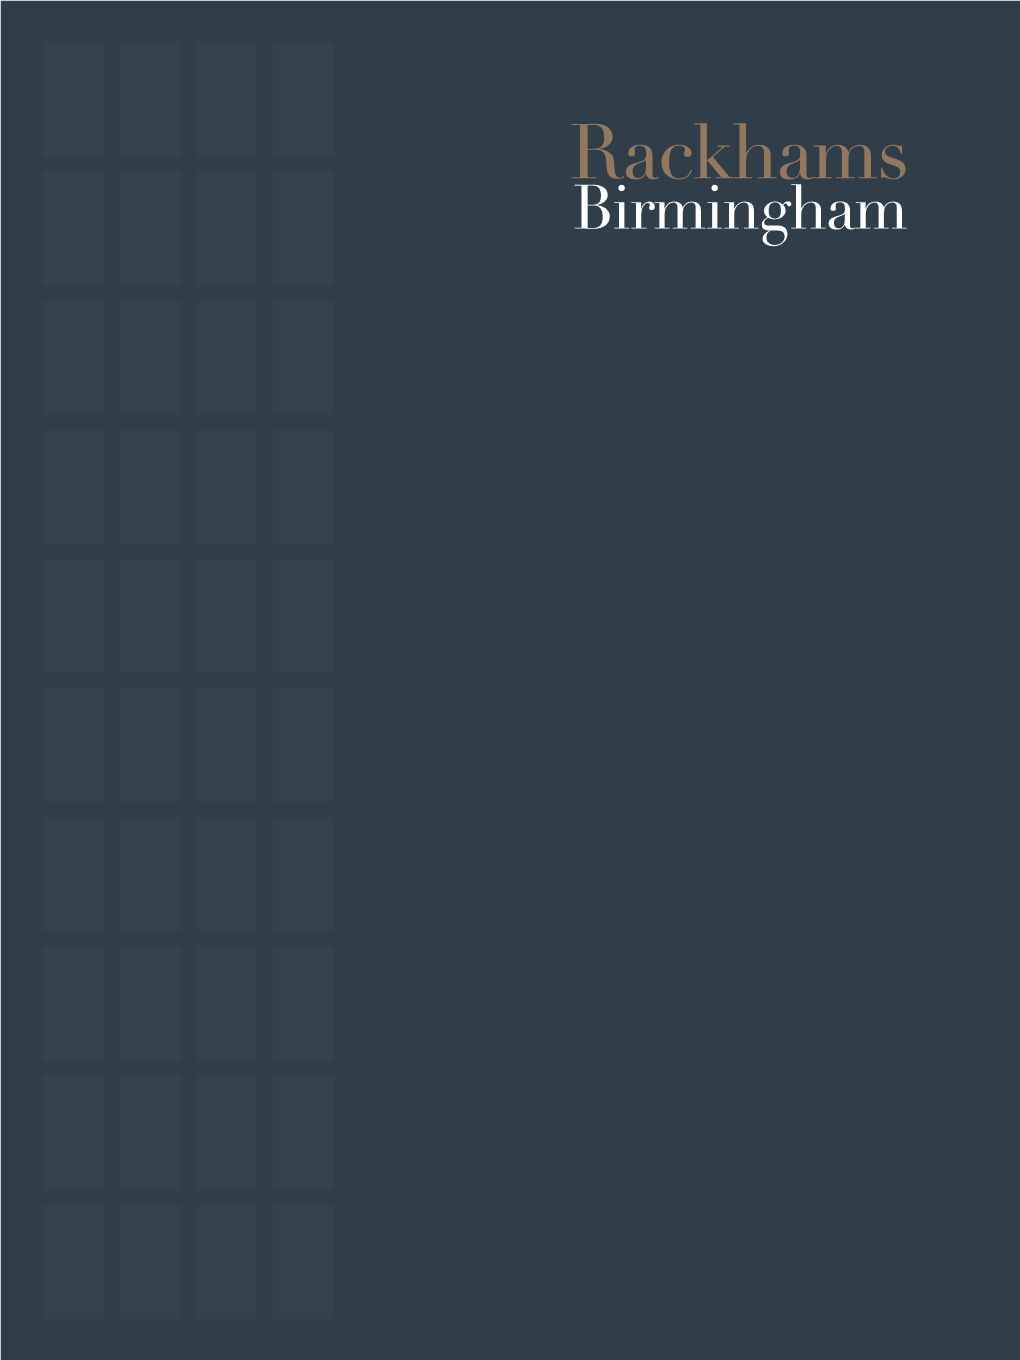 Rackhams Birmingham Rackhams Birmingham “Quite Simply the Best Refurbishment Or Development Opportunity in the UK”